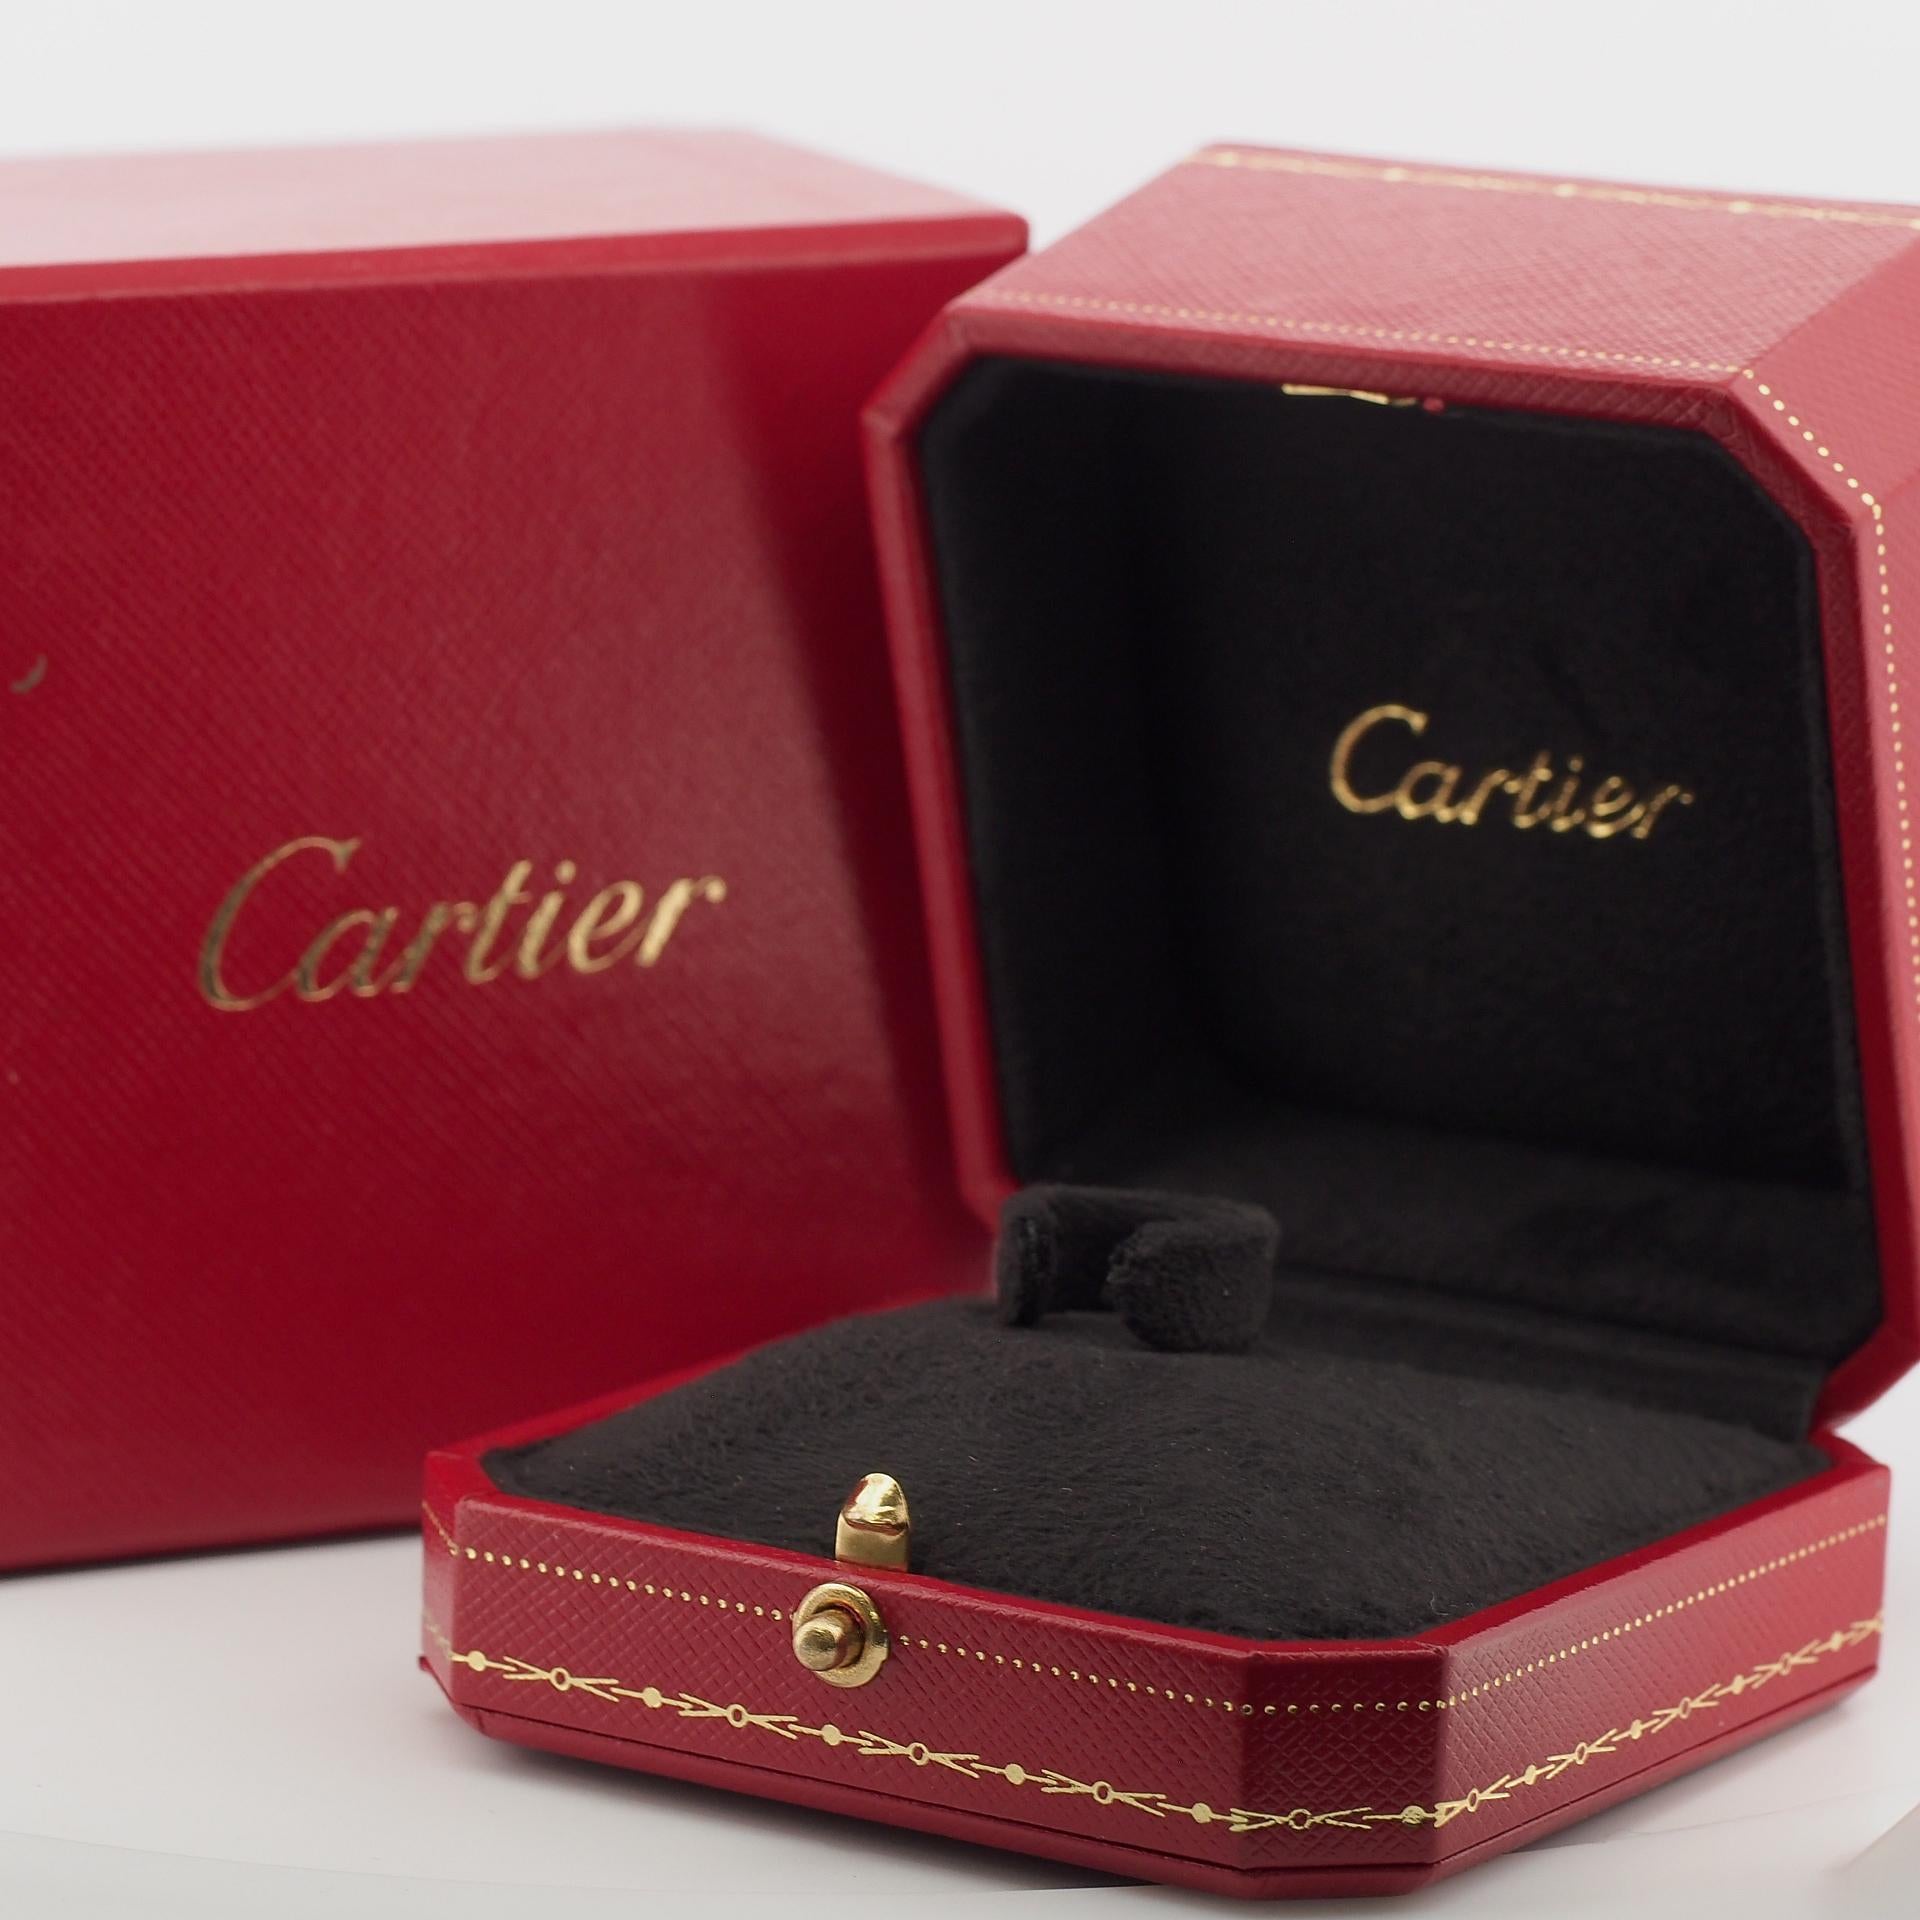 Cartier Ballerine Solitaire 0.24ct Diamond Engagement Ring Pt 51 4